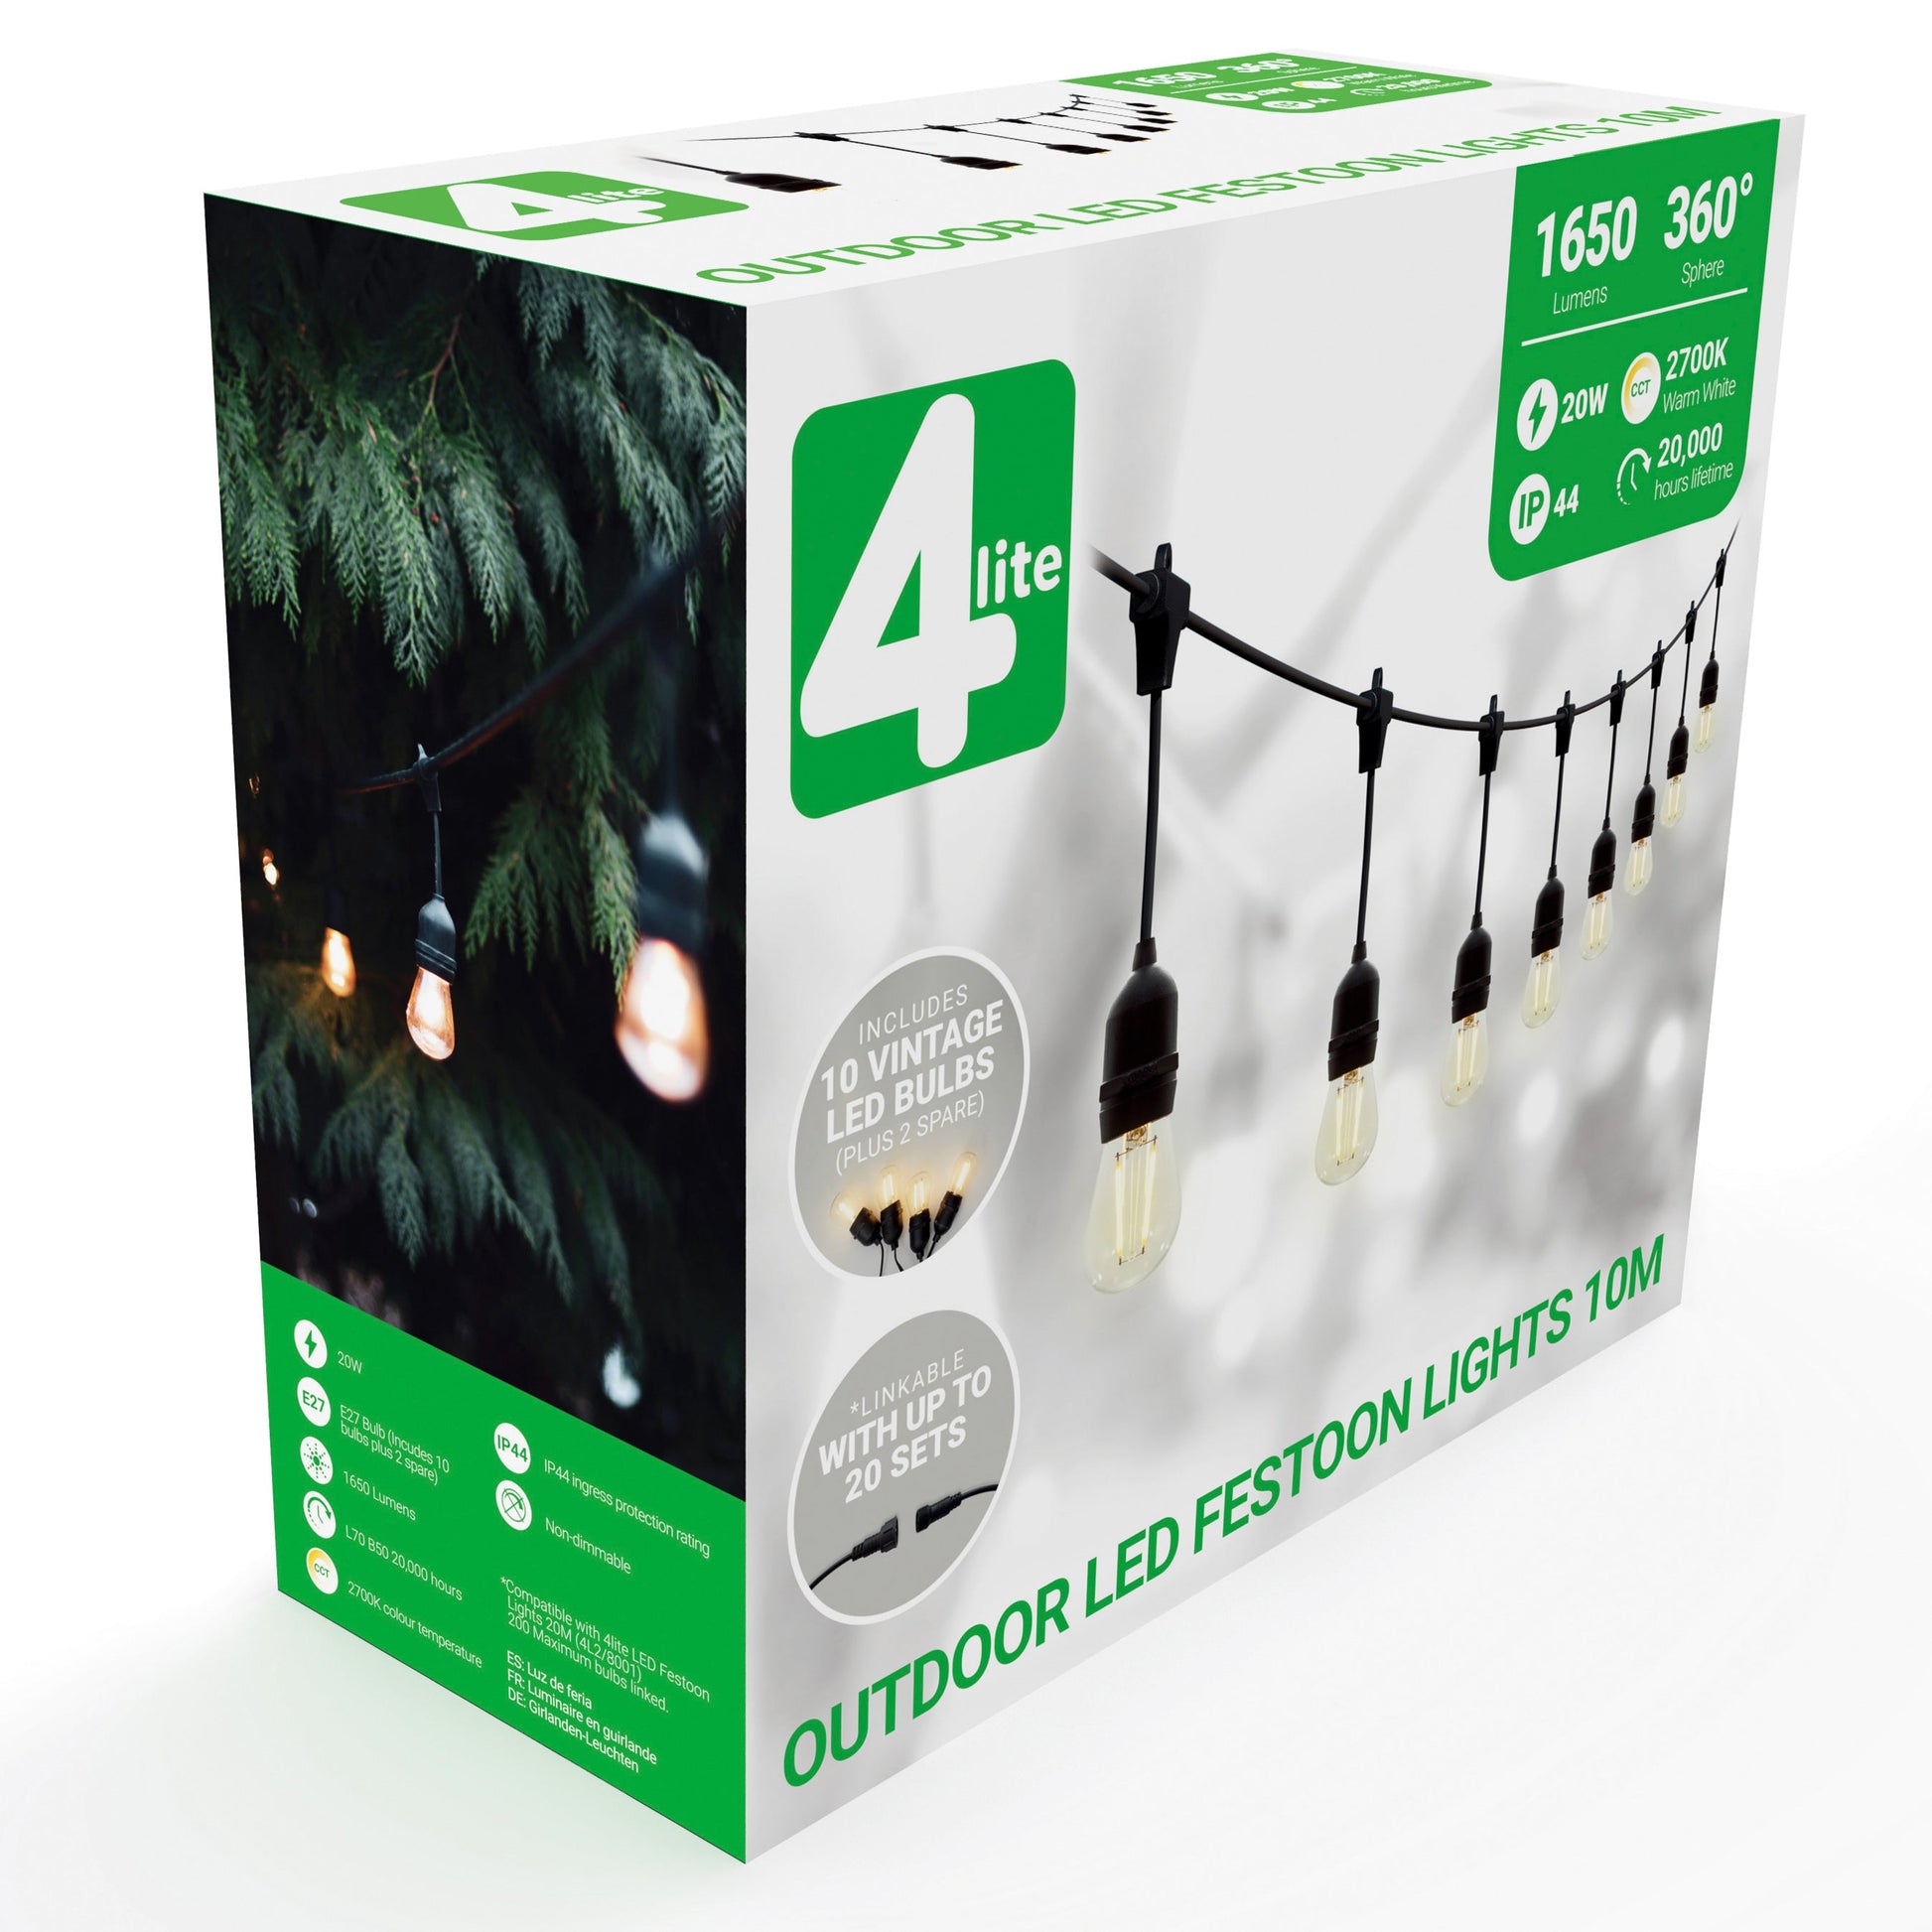 4lite Festoon Lighting Outdoor String Lamps with E27 Screw Warm White LED Bulbs - maplin.co.uk